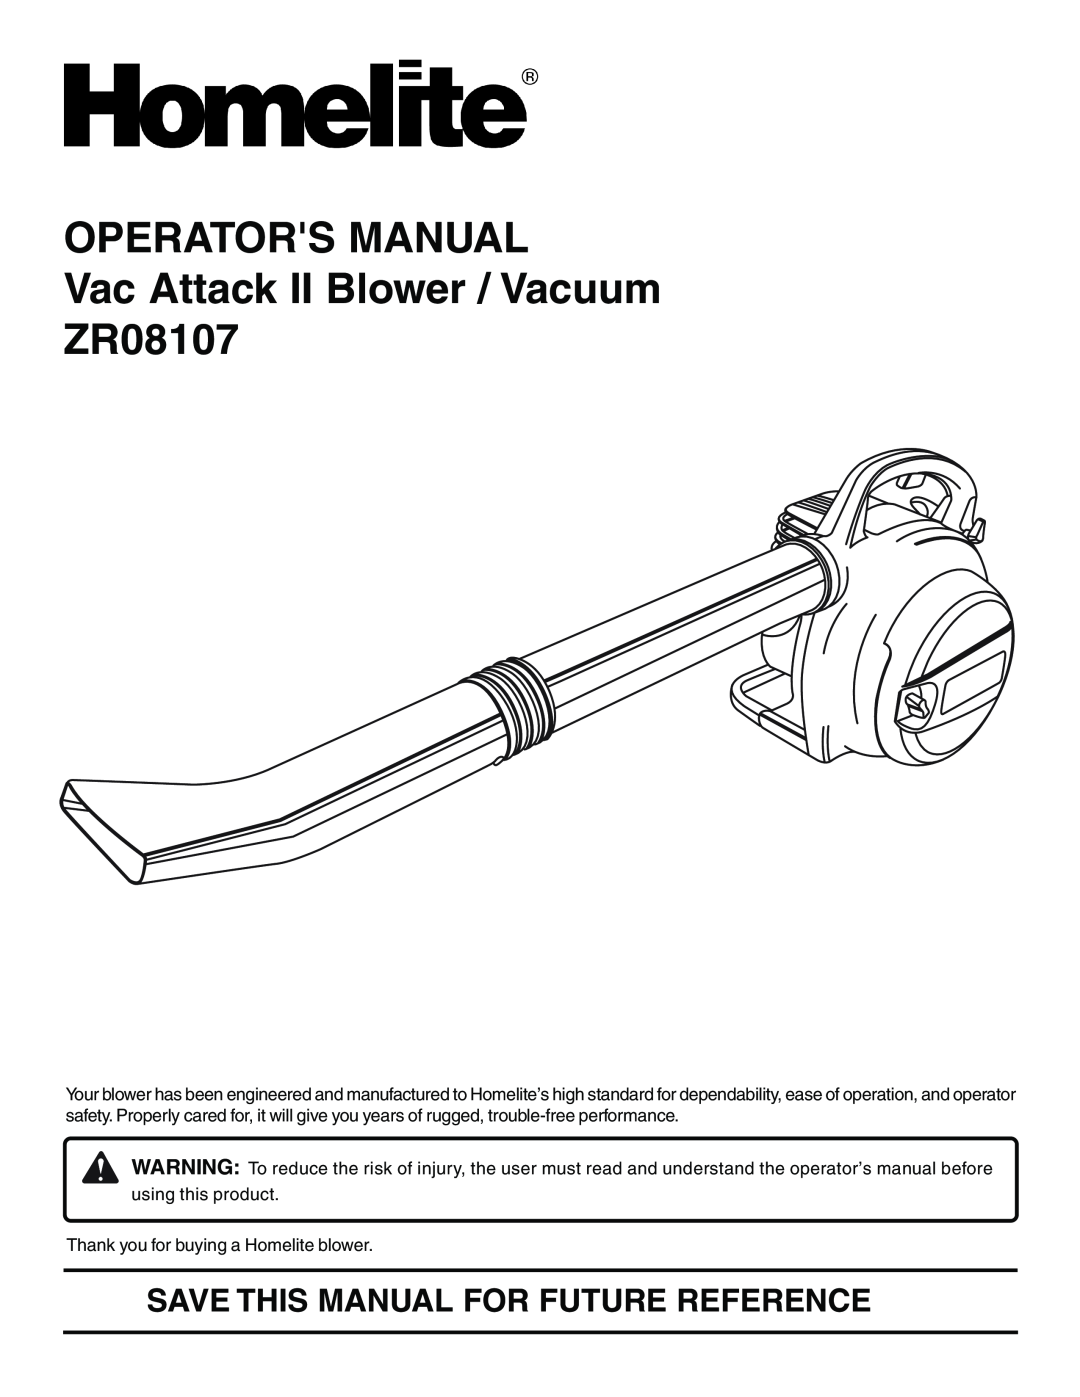 Homelite ZR08107 manual OPERATORS MANUAL Vac Attack II Blower / Vacuum, Save This Manual For Future Reference 